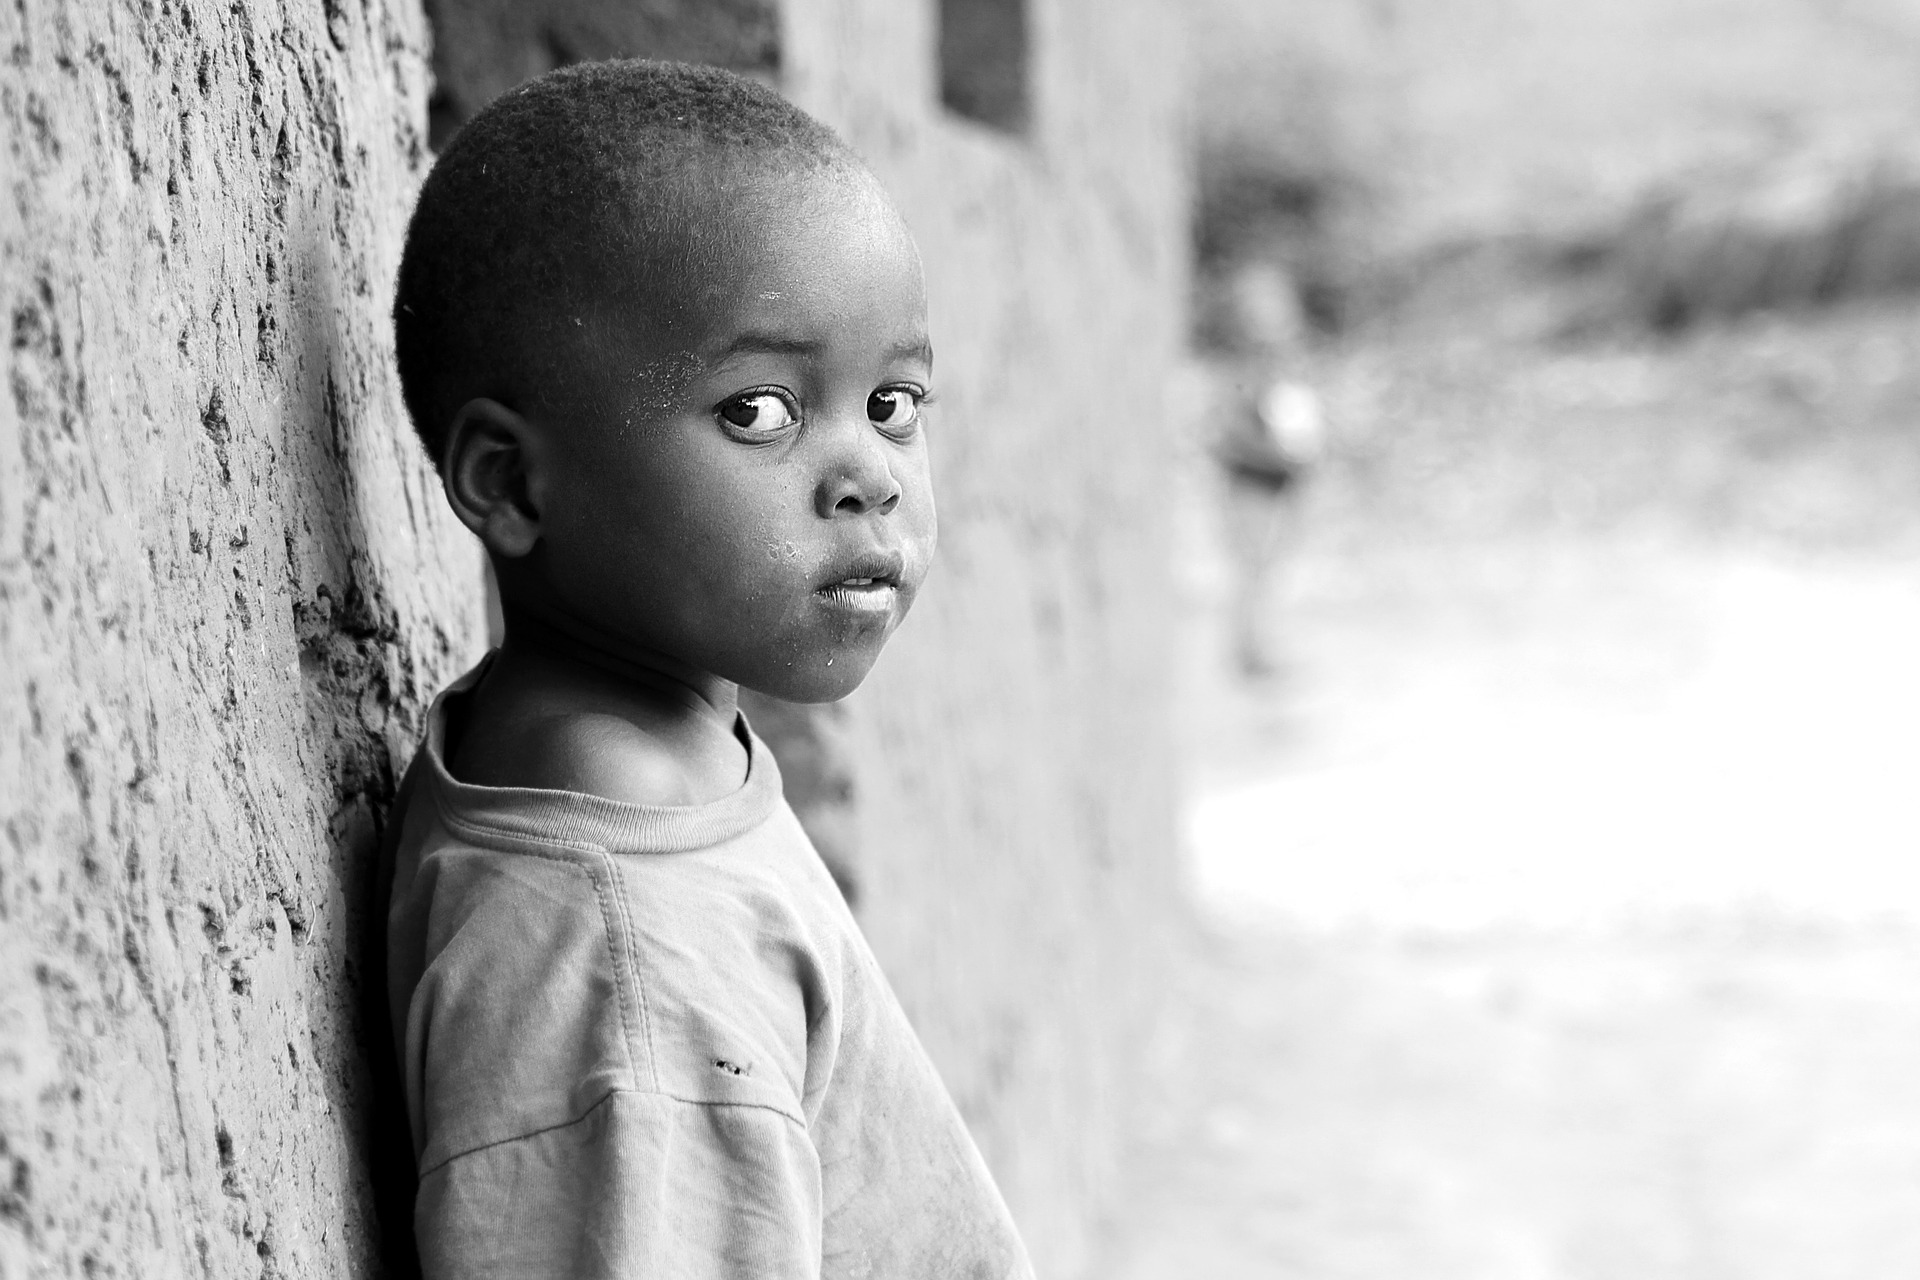 Eλονοσία: 435.000 παιδιά κάτω των 5 ετών έχασαν τη ζωή τους το 2017…